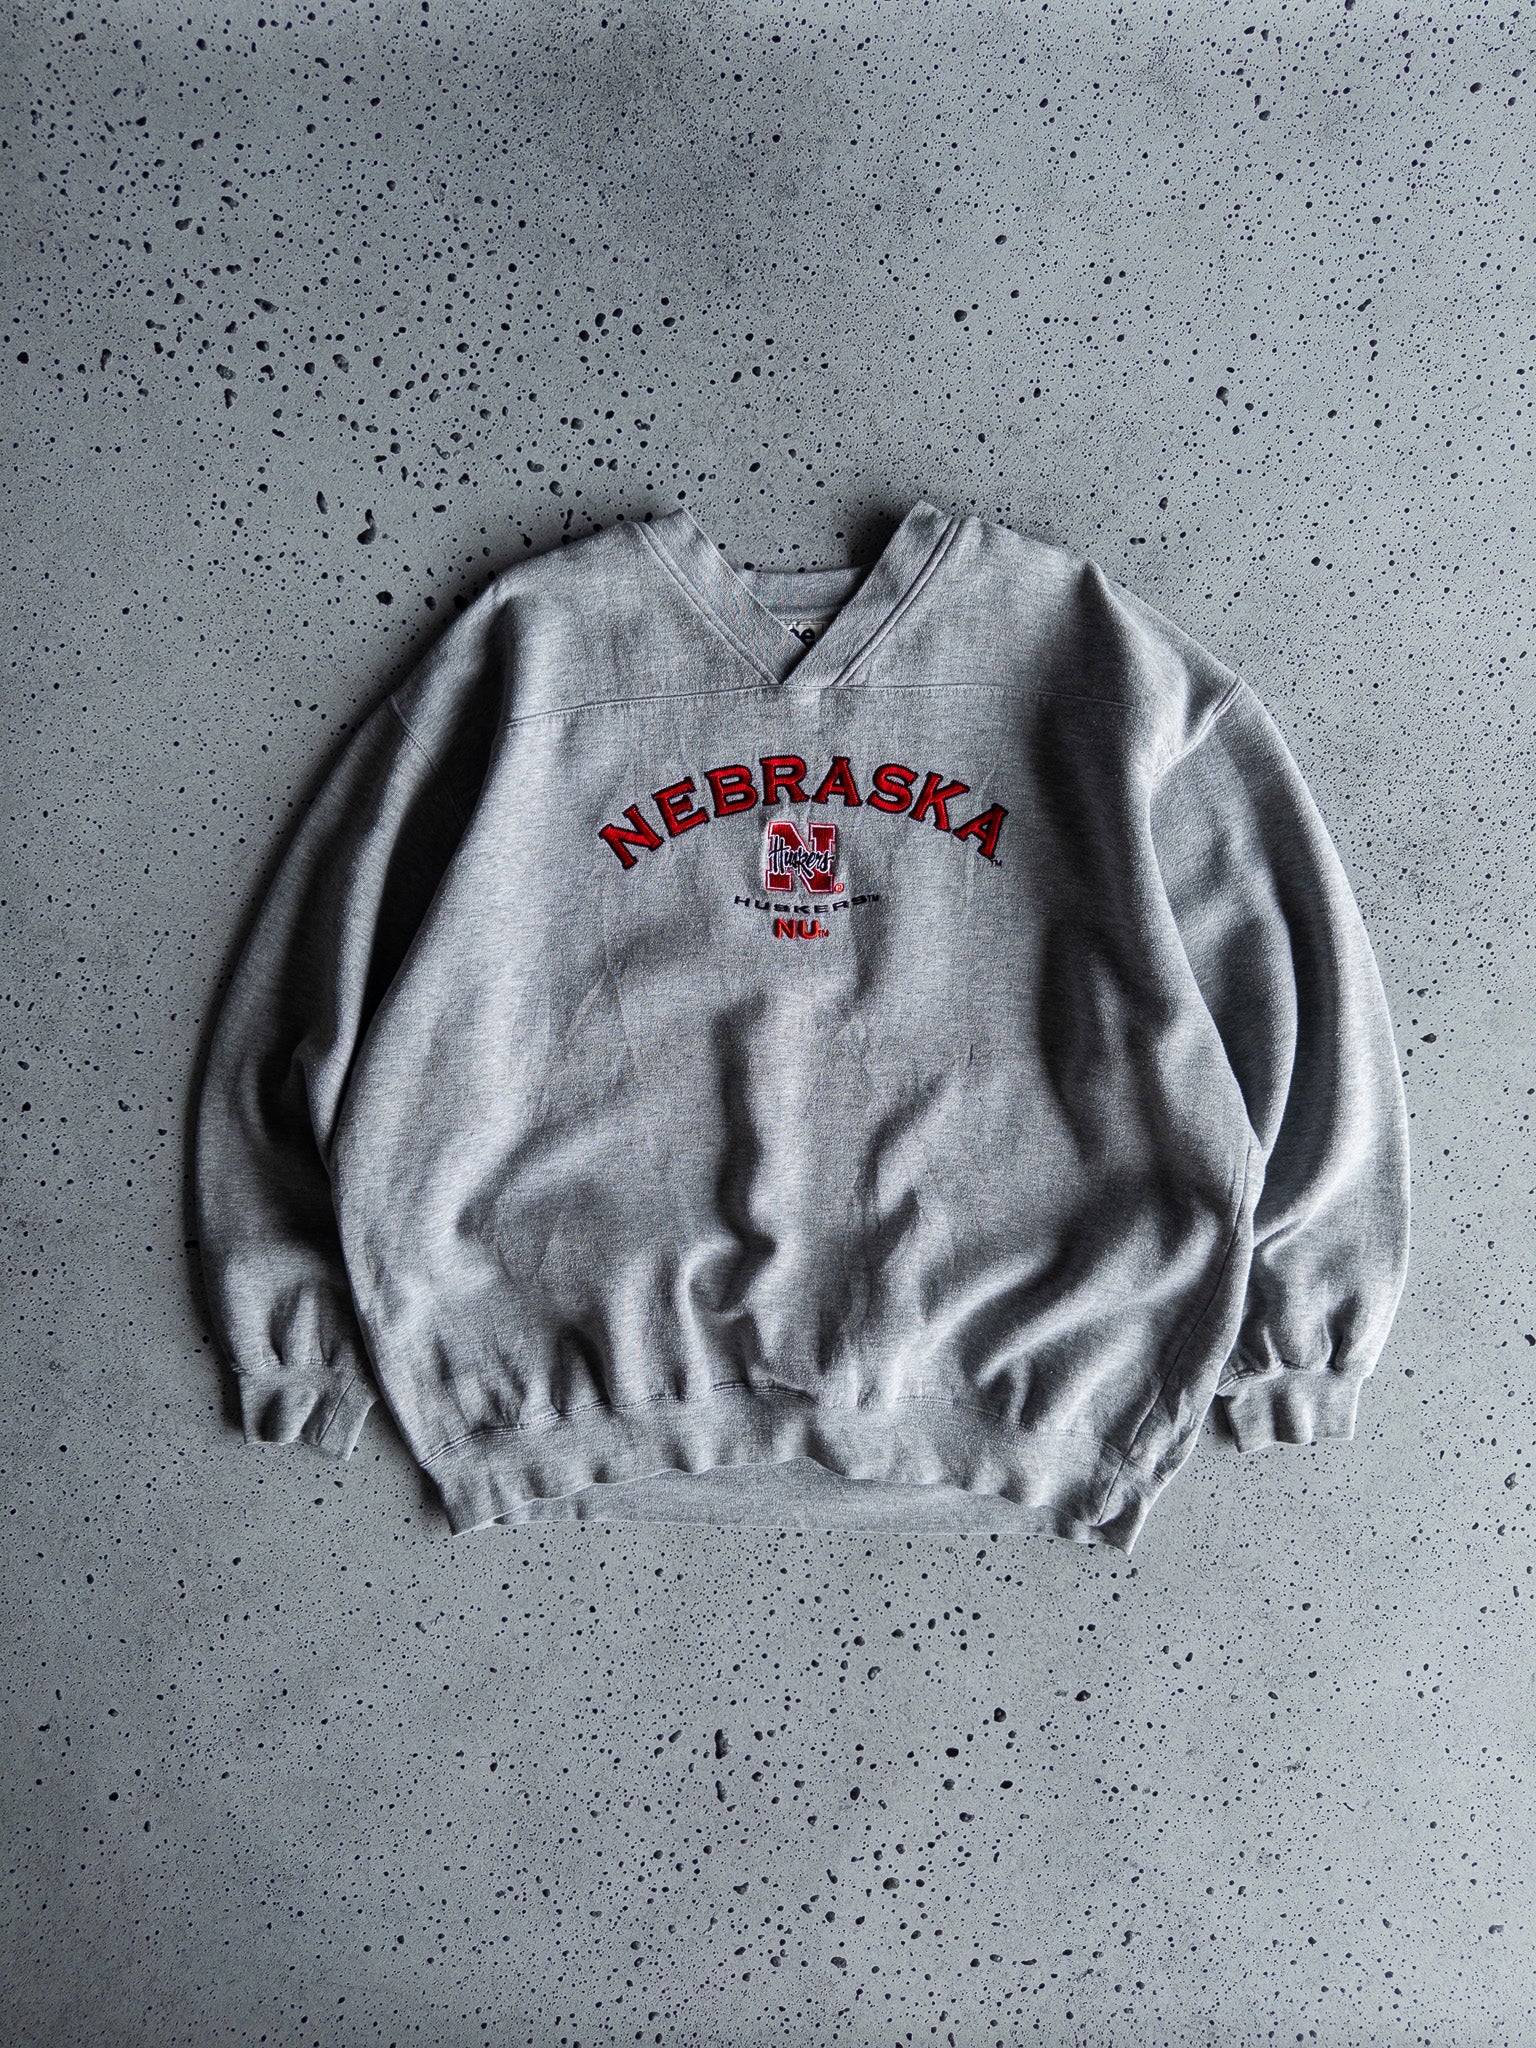 Vintage Nebraska Huskers Sweatshirt (XL)